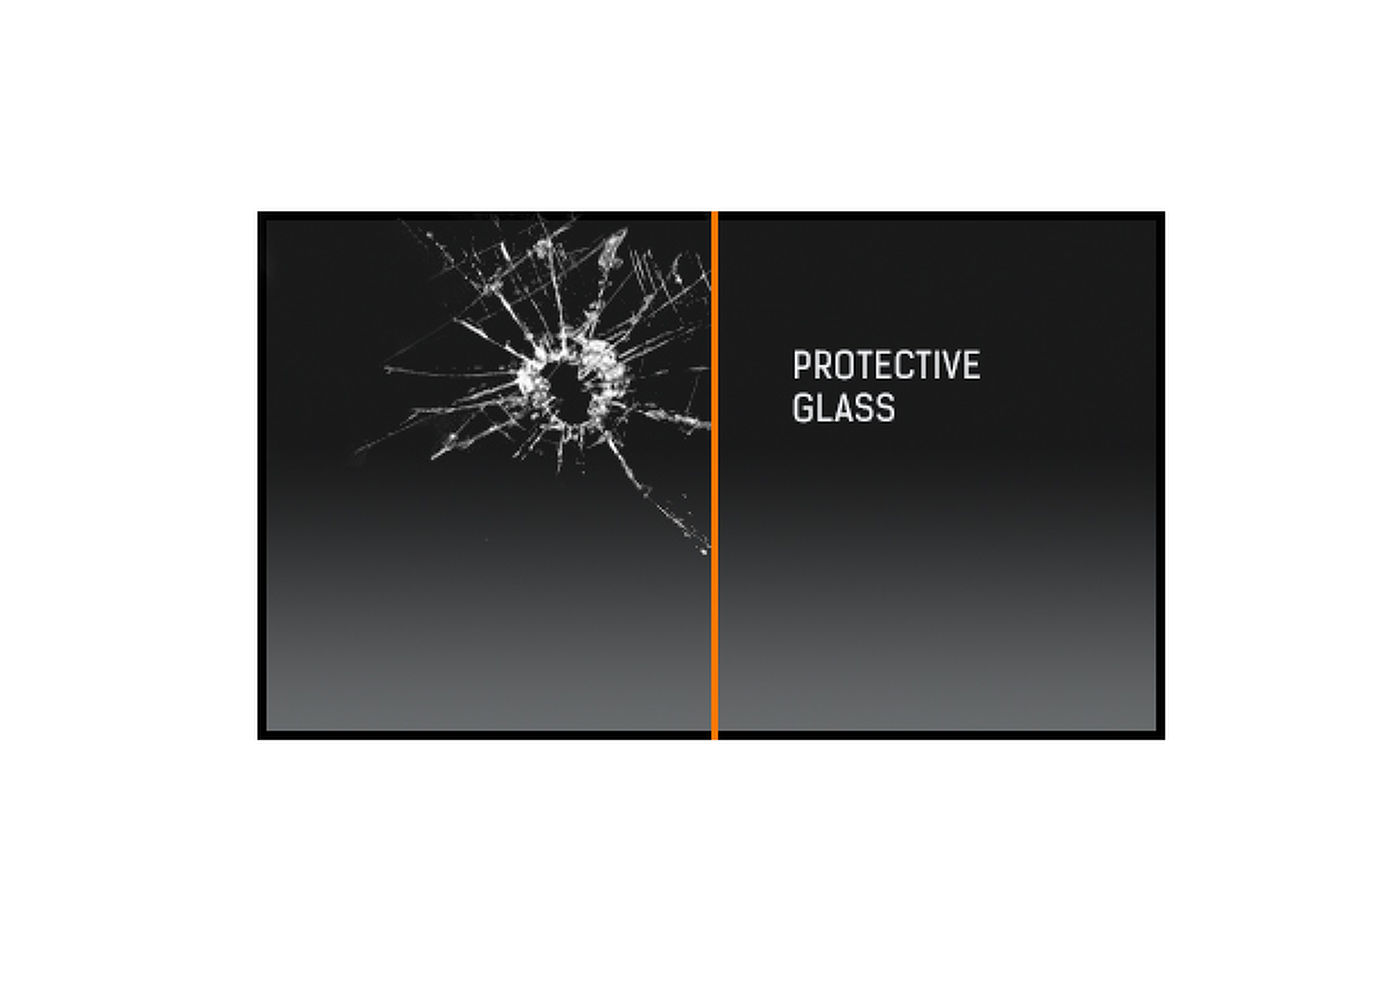 Protective glass